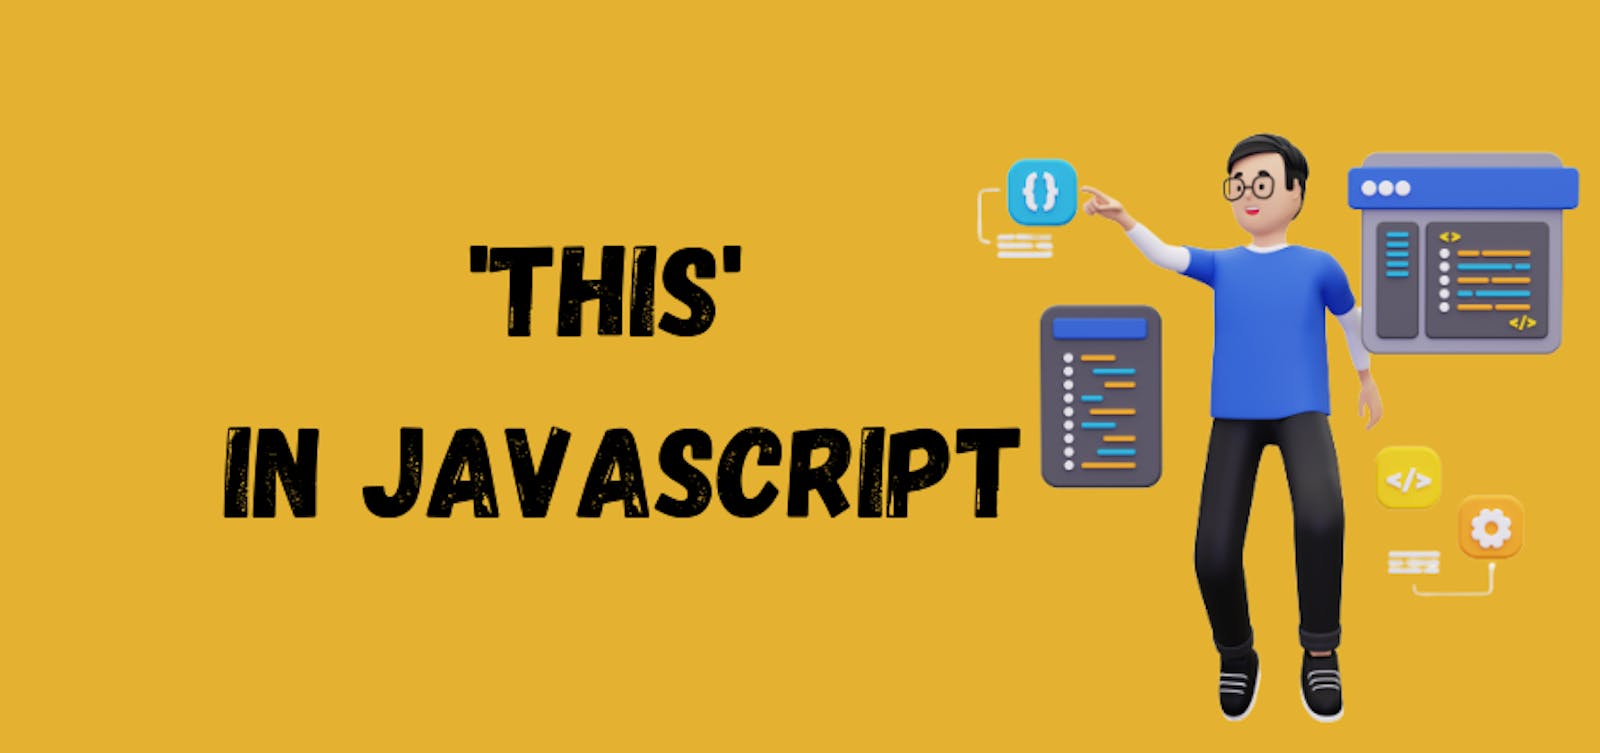 'this' in JavaScript: 10 Scenarios Simplified for Beginners